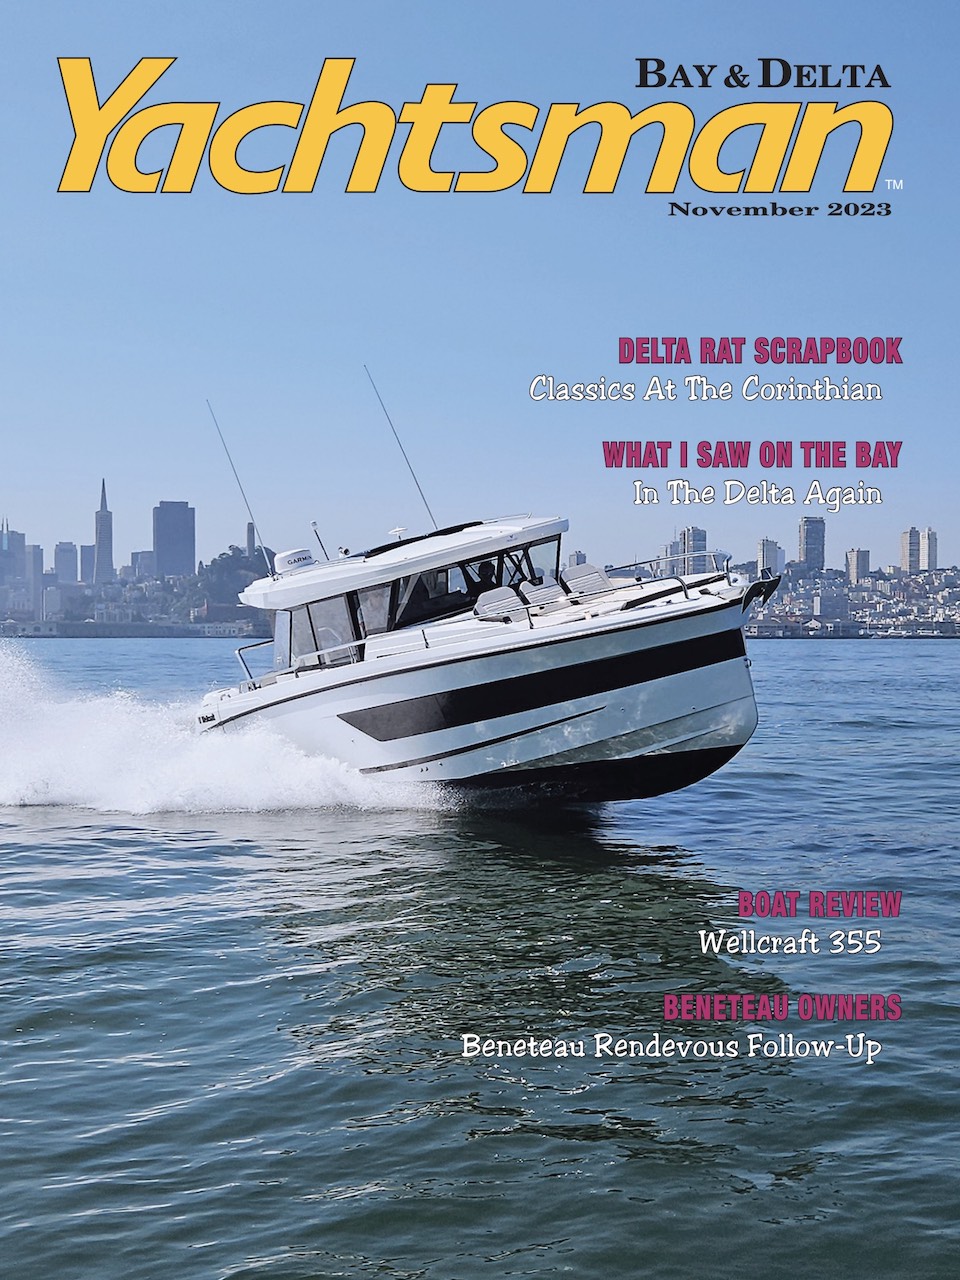 yachtsman magazine cover